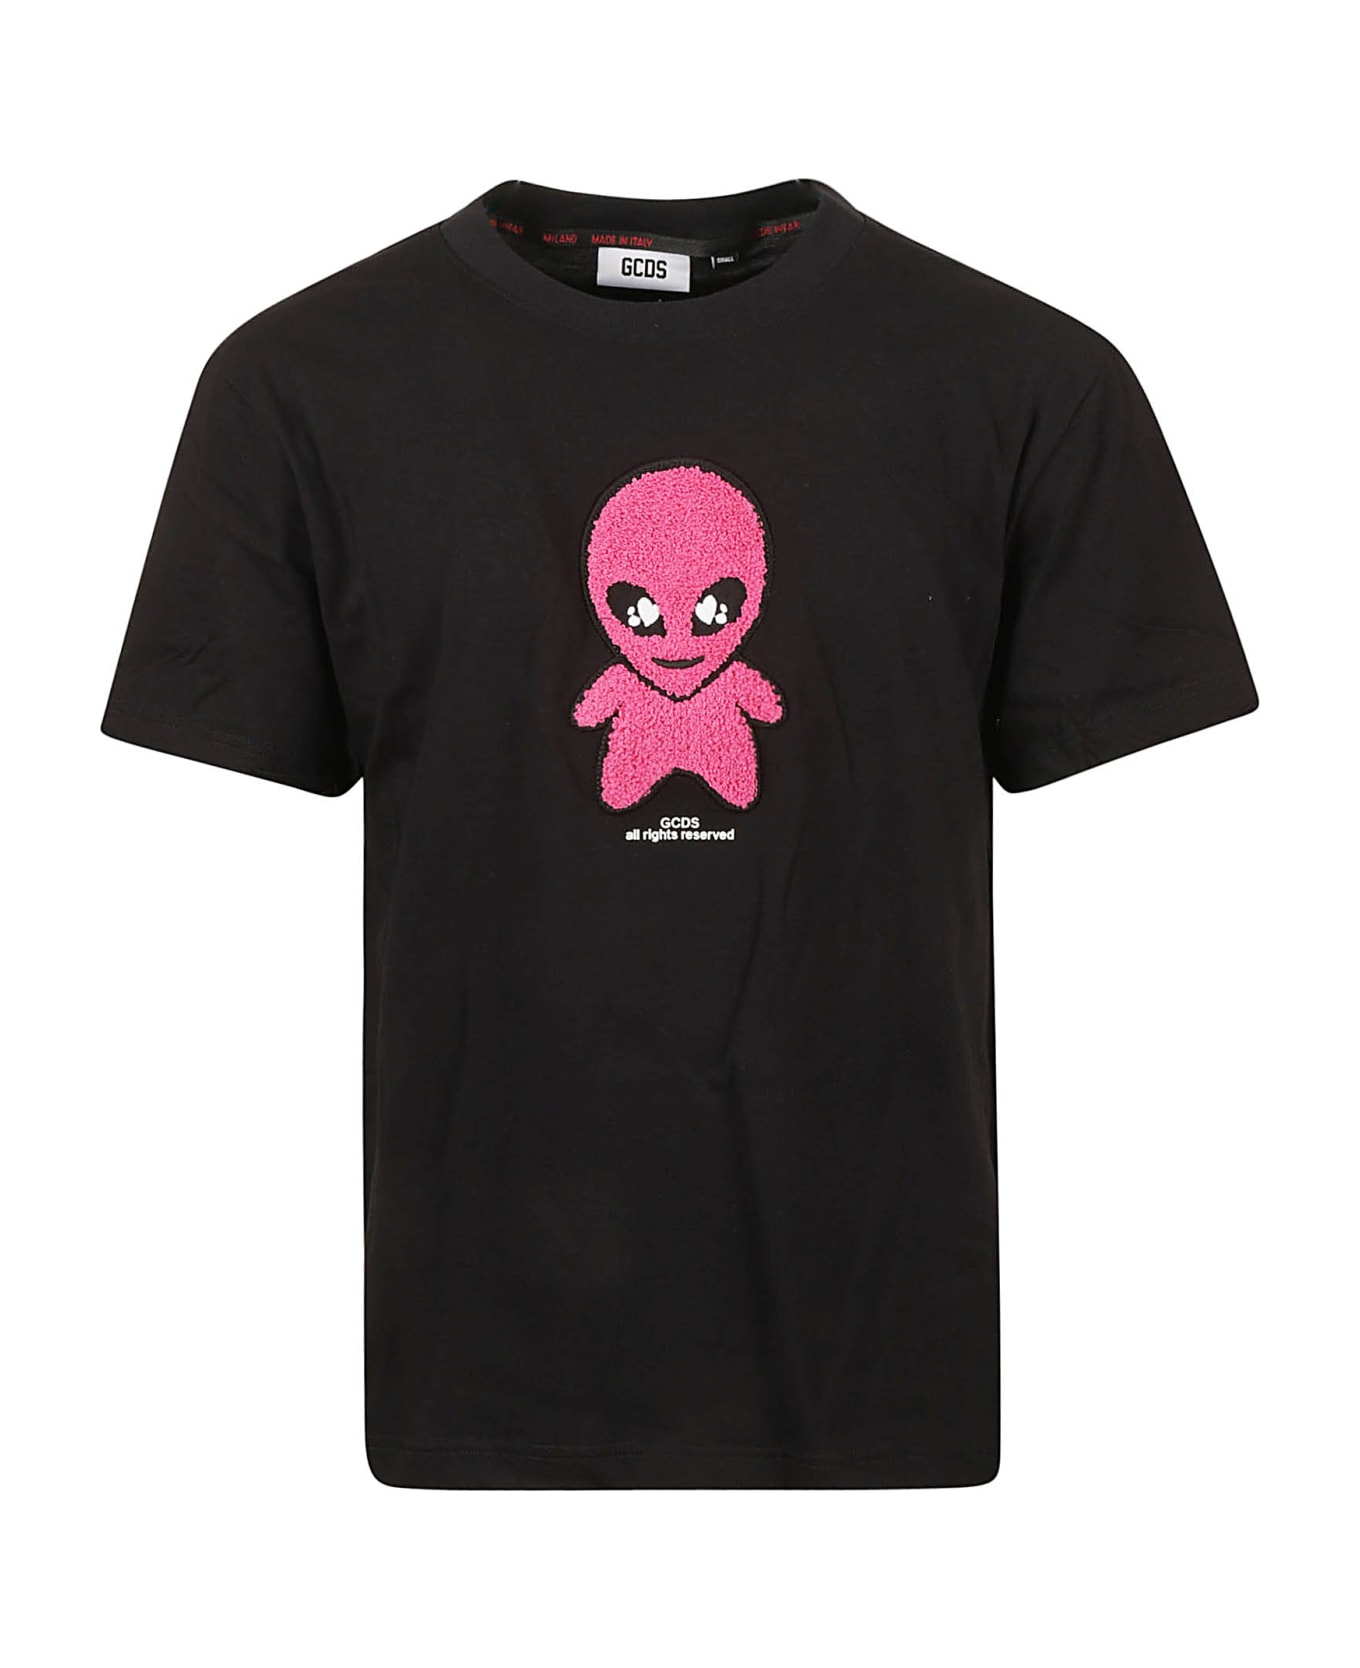 GCDS Alien Patched Regular T-shirt - Black